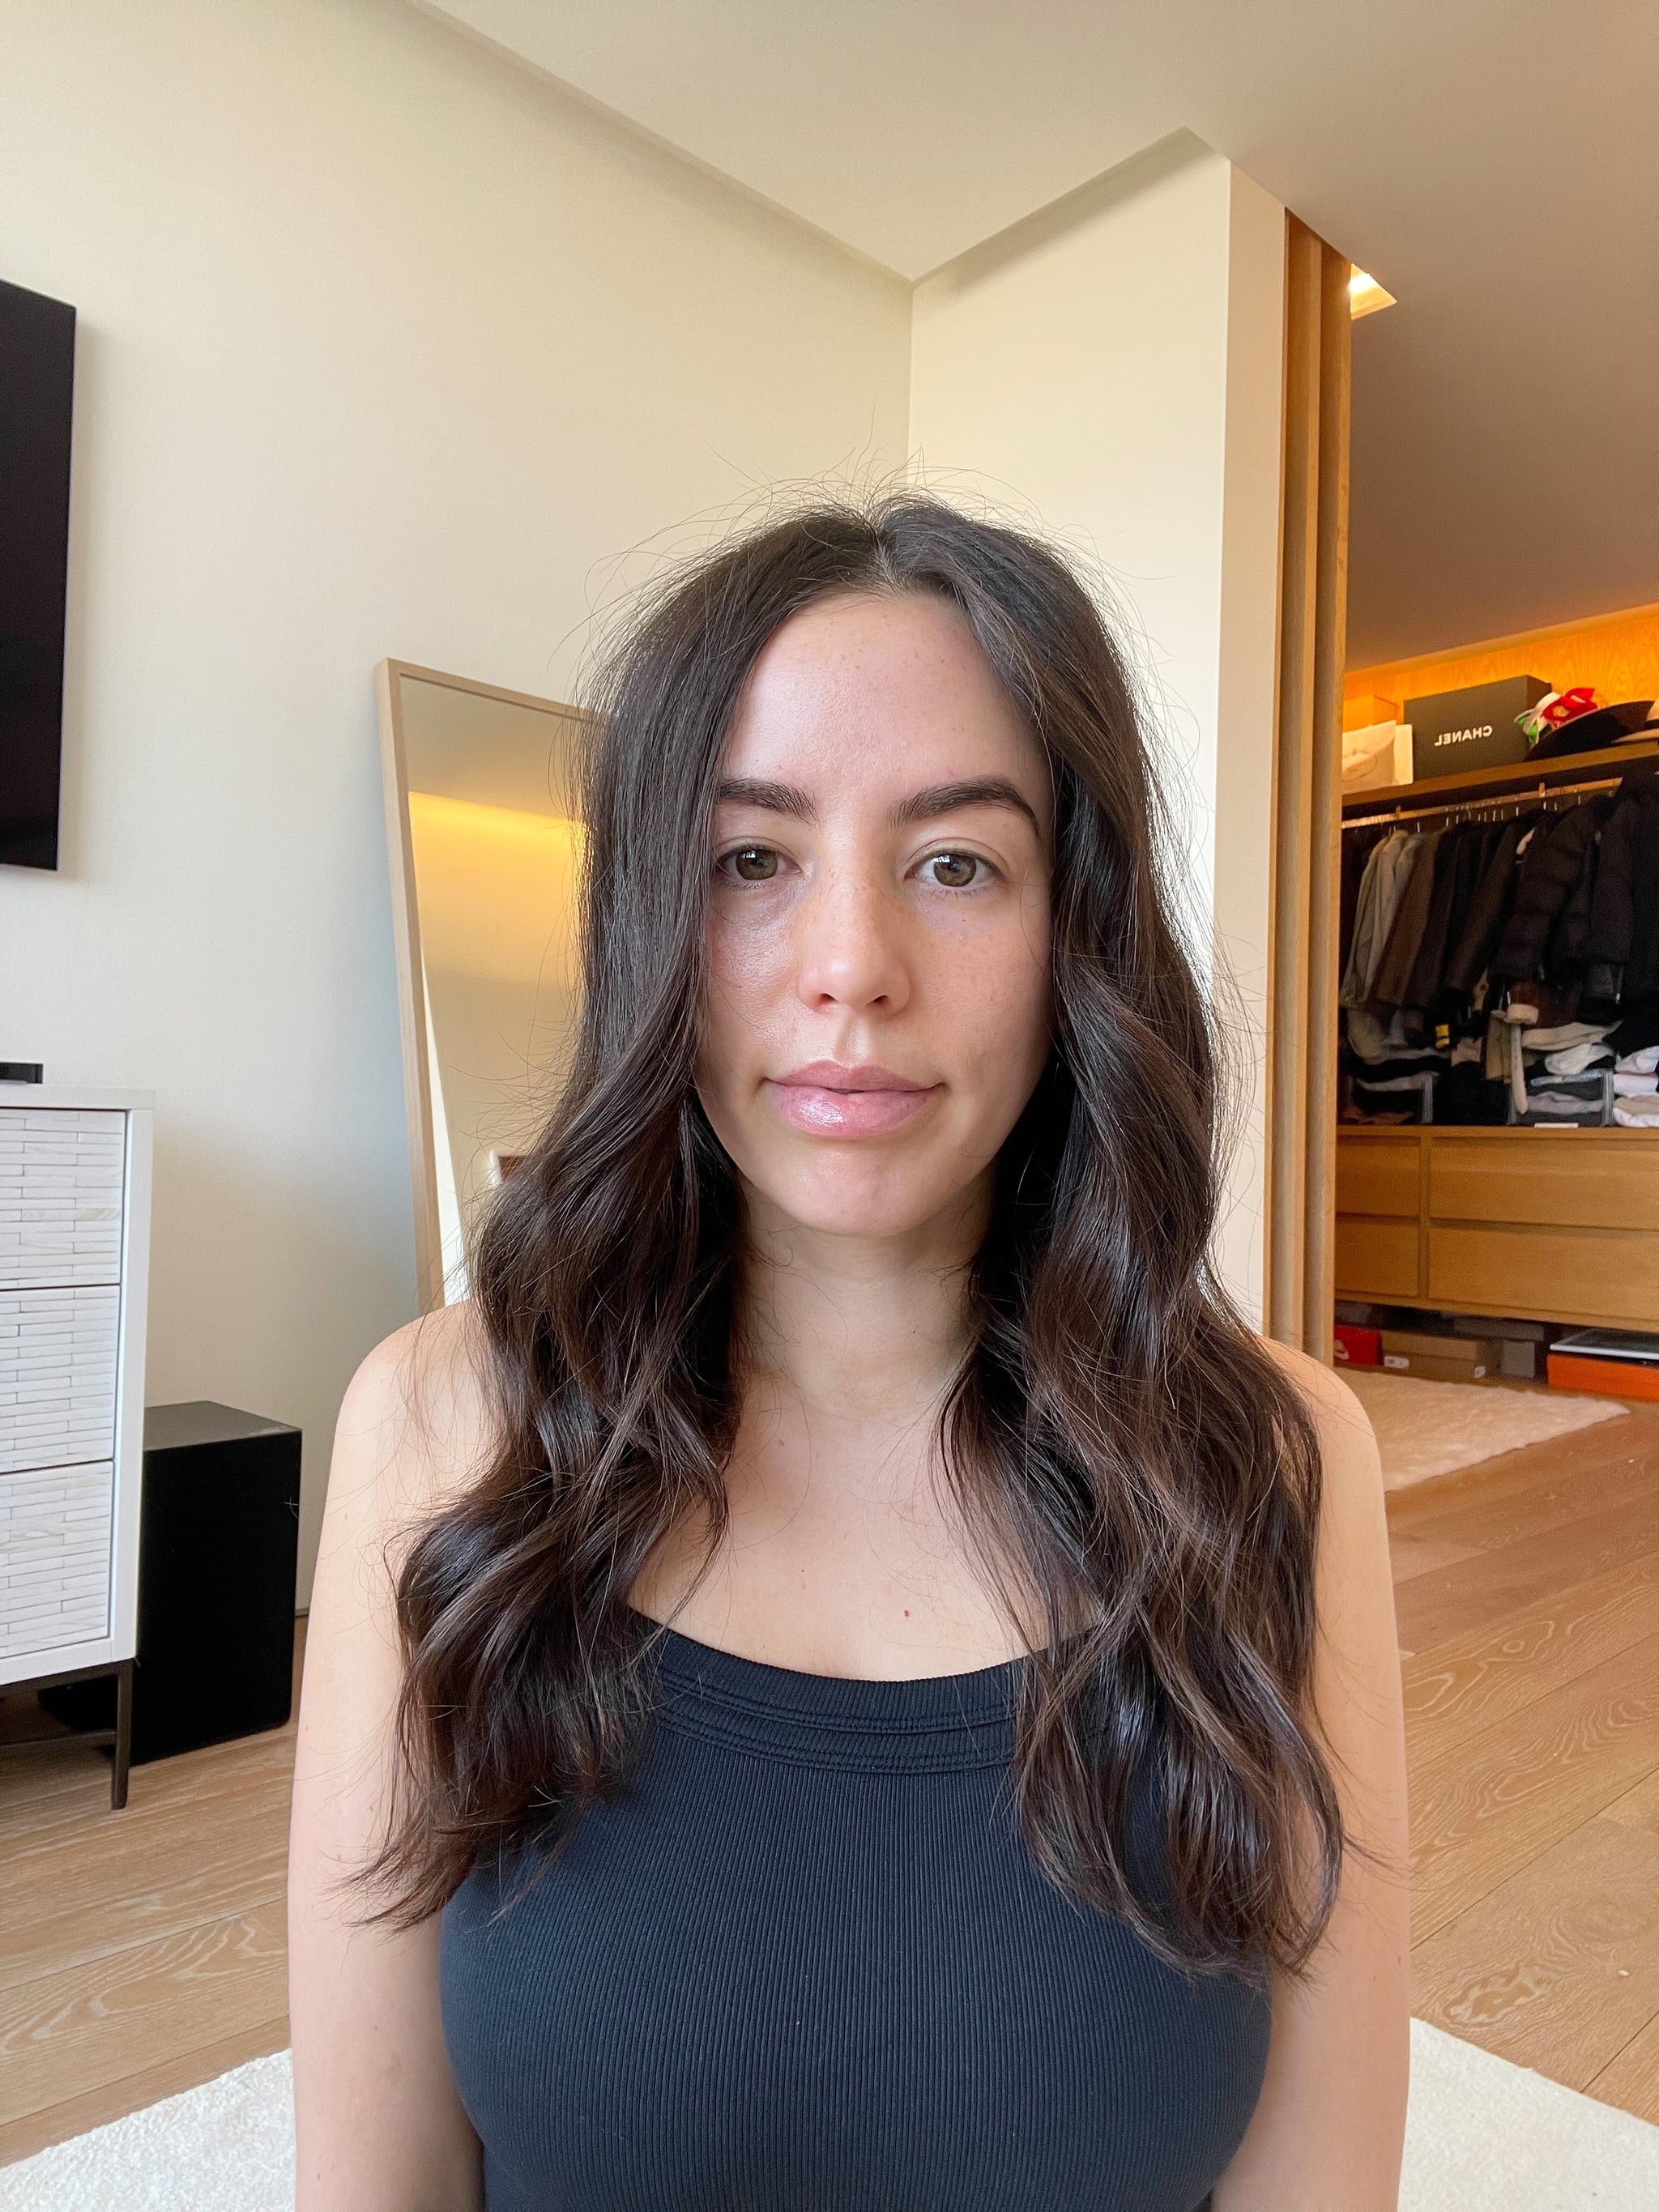 I Tried TikTok's Face Framing Curl Hack: See the Photos | POPSUGAR Beauty